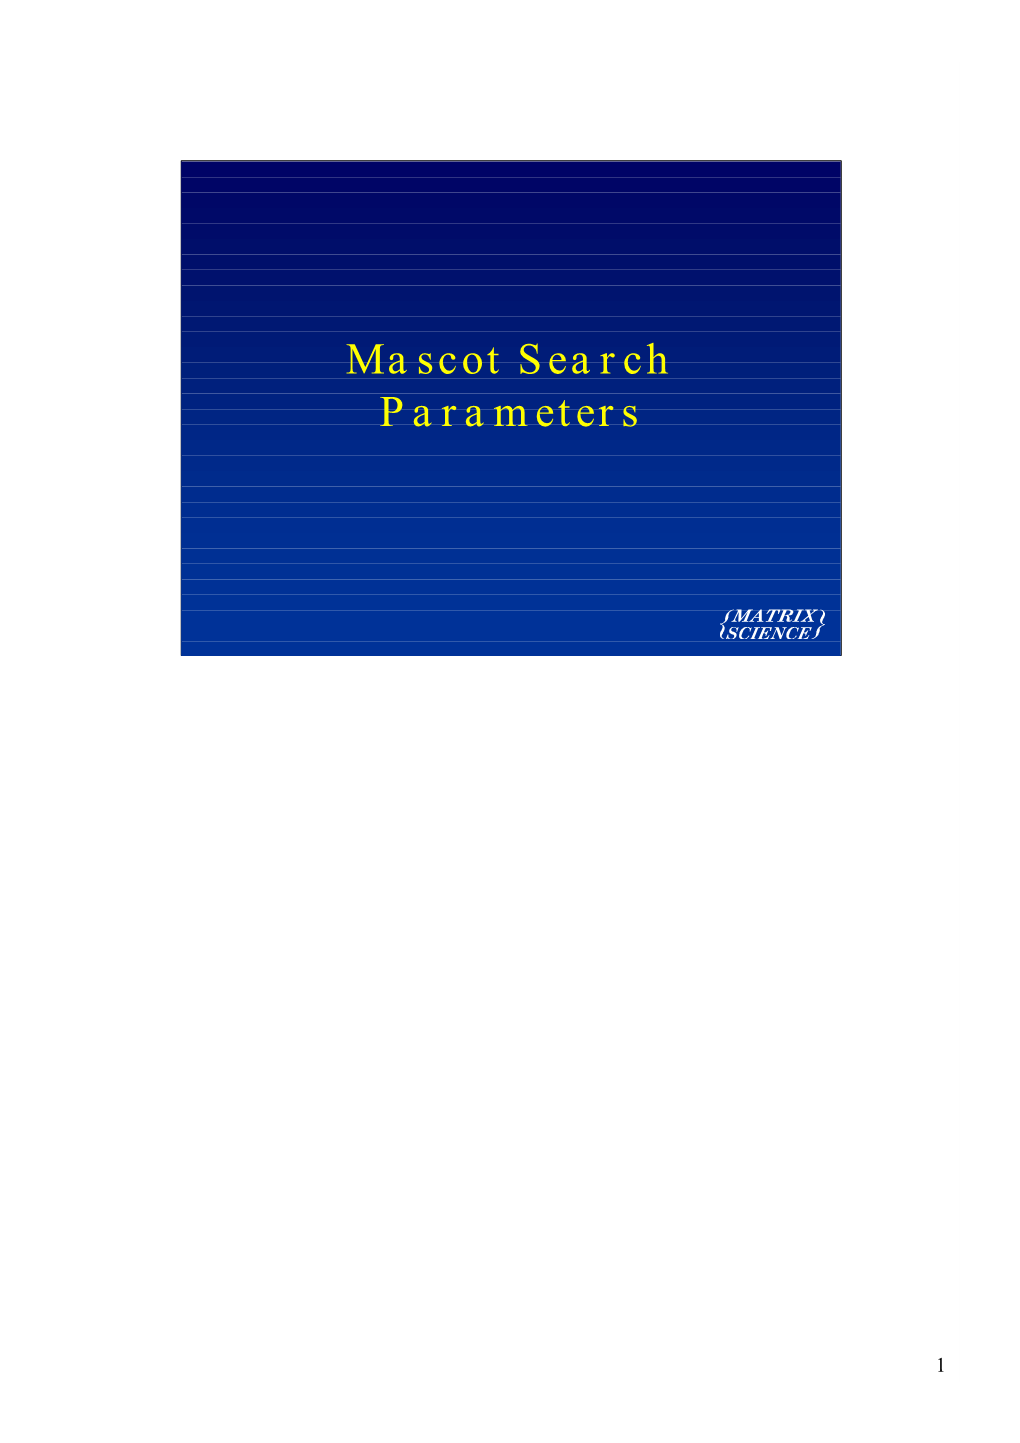 Mascot Search Parameters